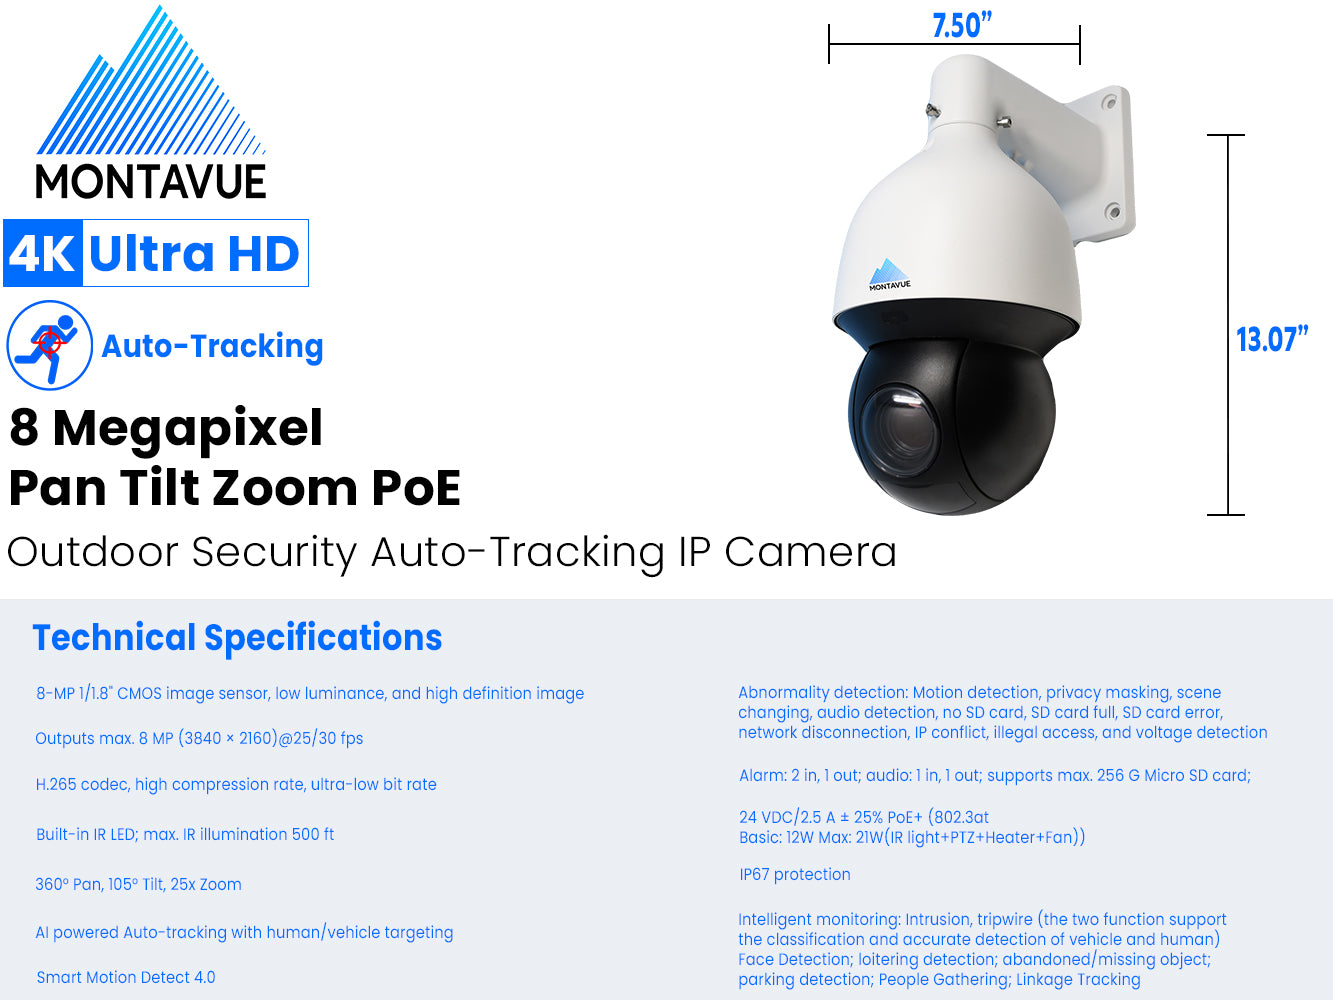 MTZ8250-X | 8MP 4K Auto-Tracking PTZ Camera w/ 25x Zoom & 492ft IR Night Vision